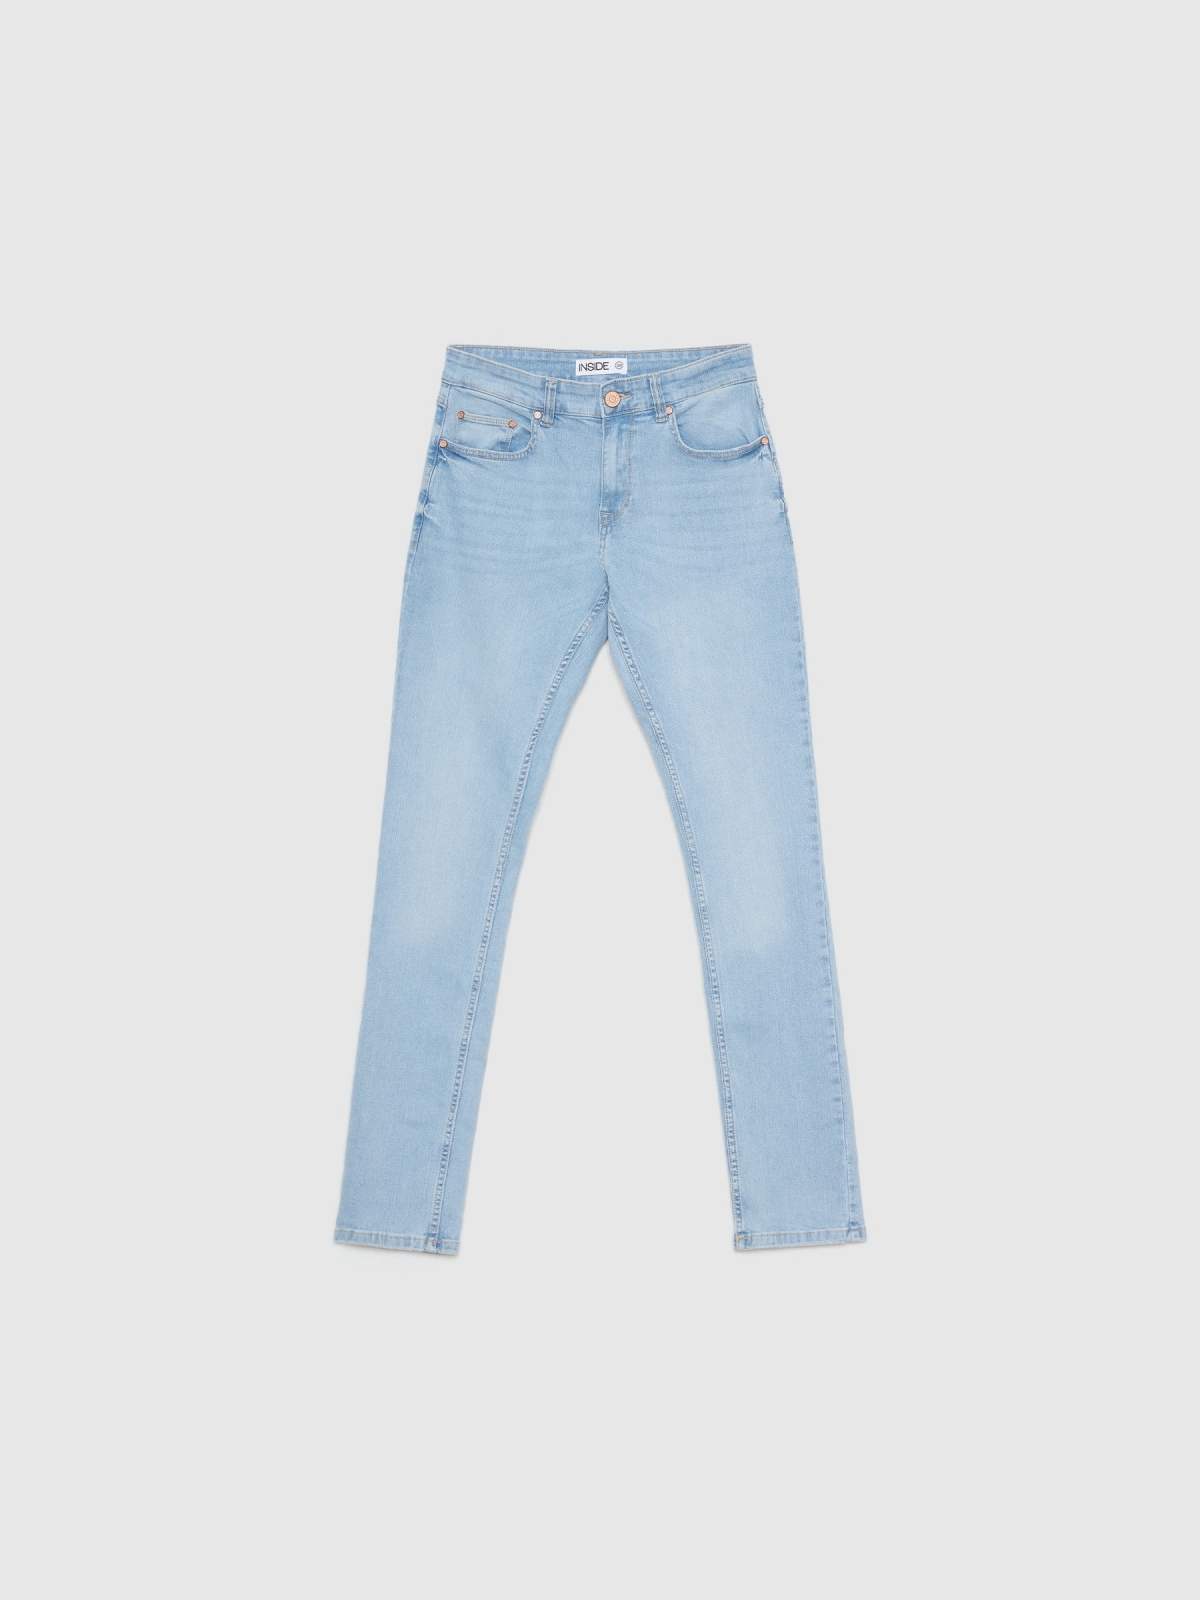  Jeans slim fit azul claro uniforme azul